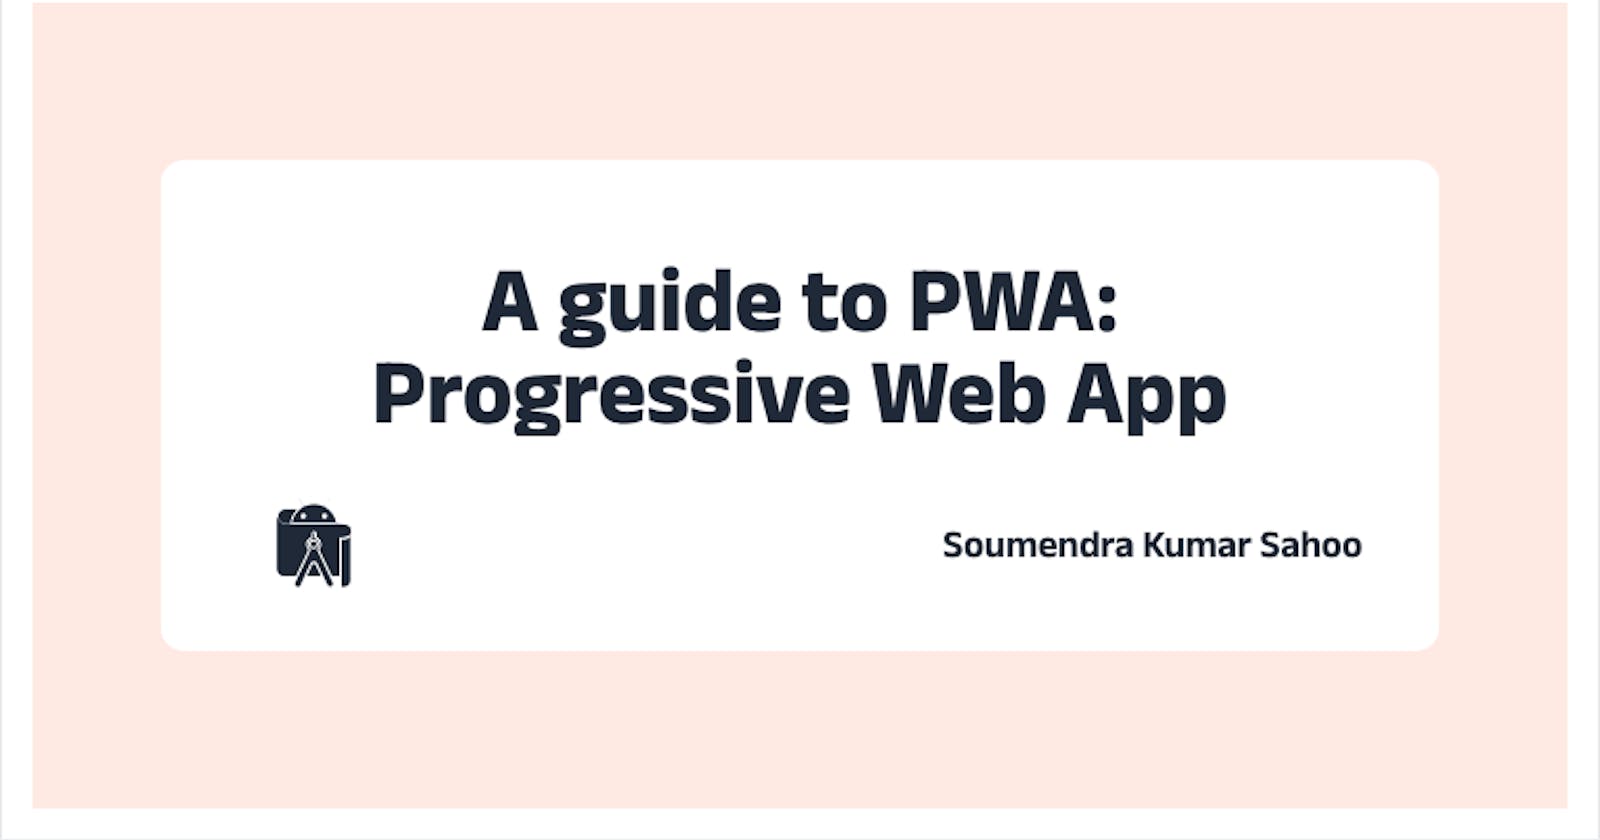 PWA: Progressive Web App